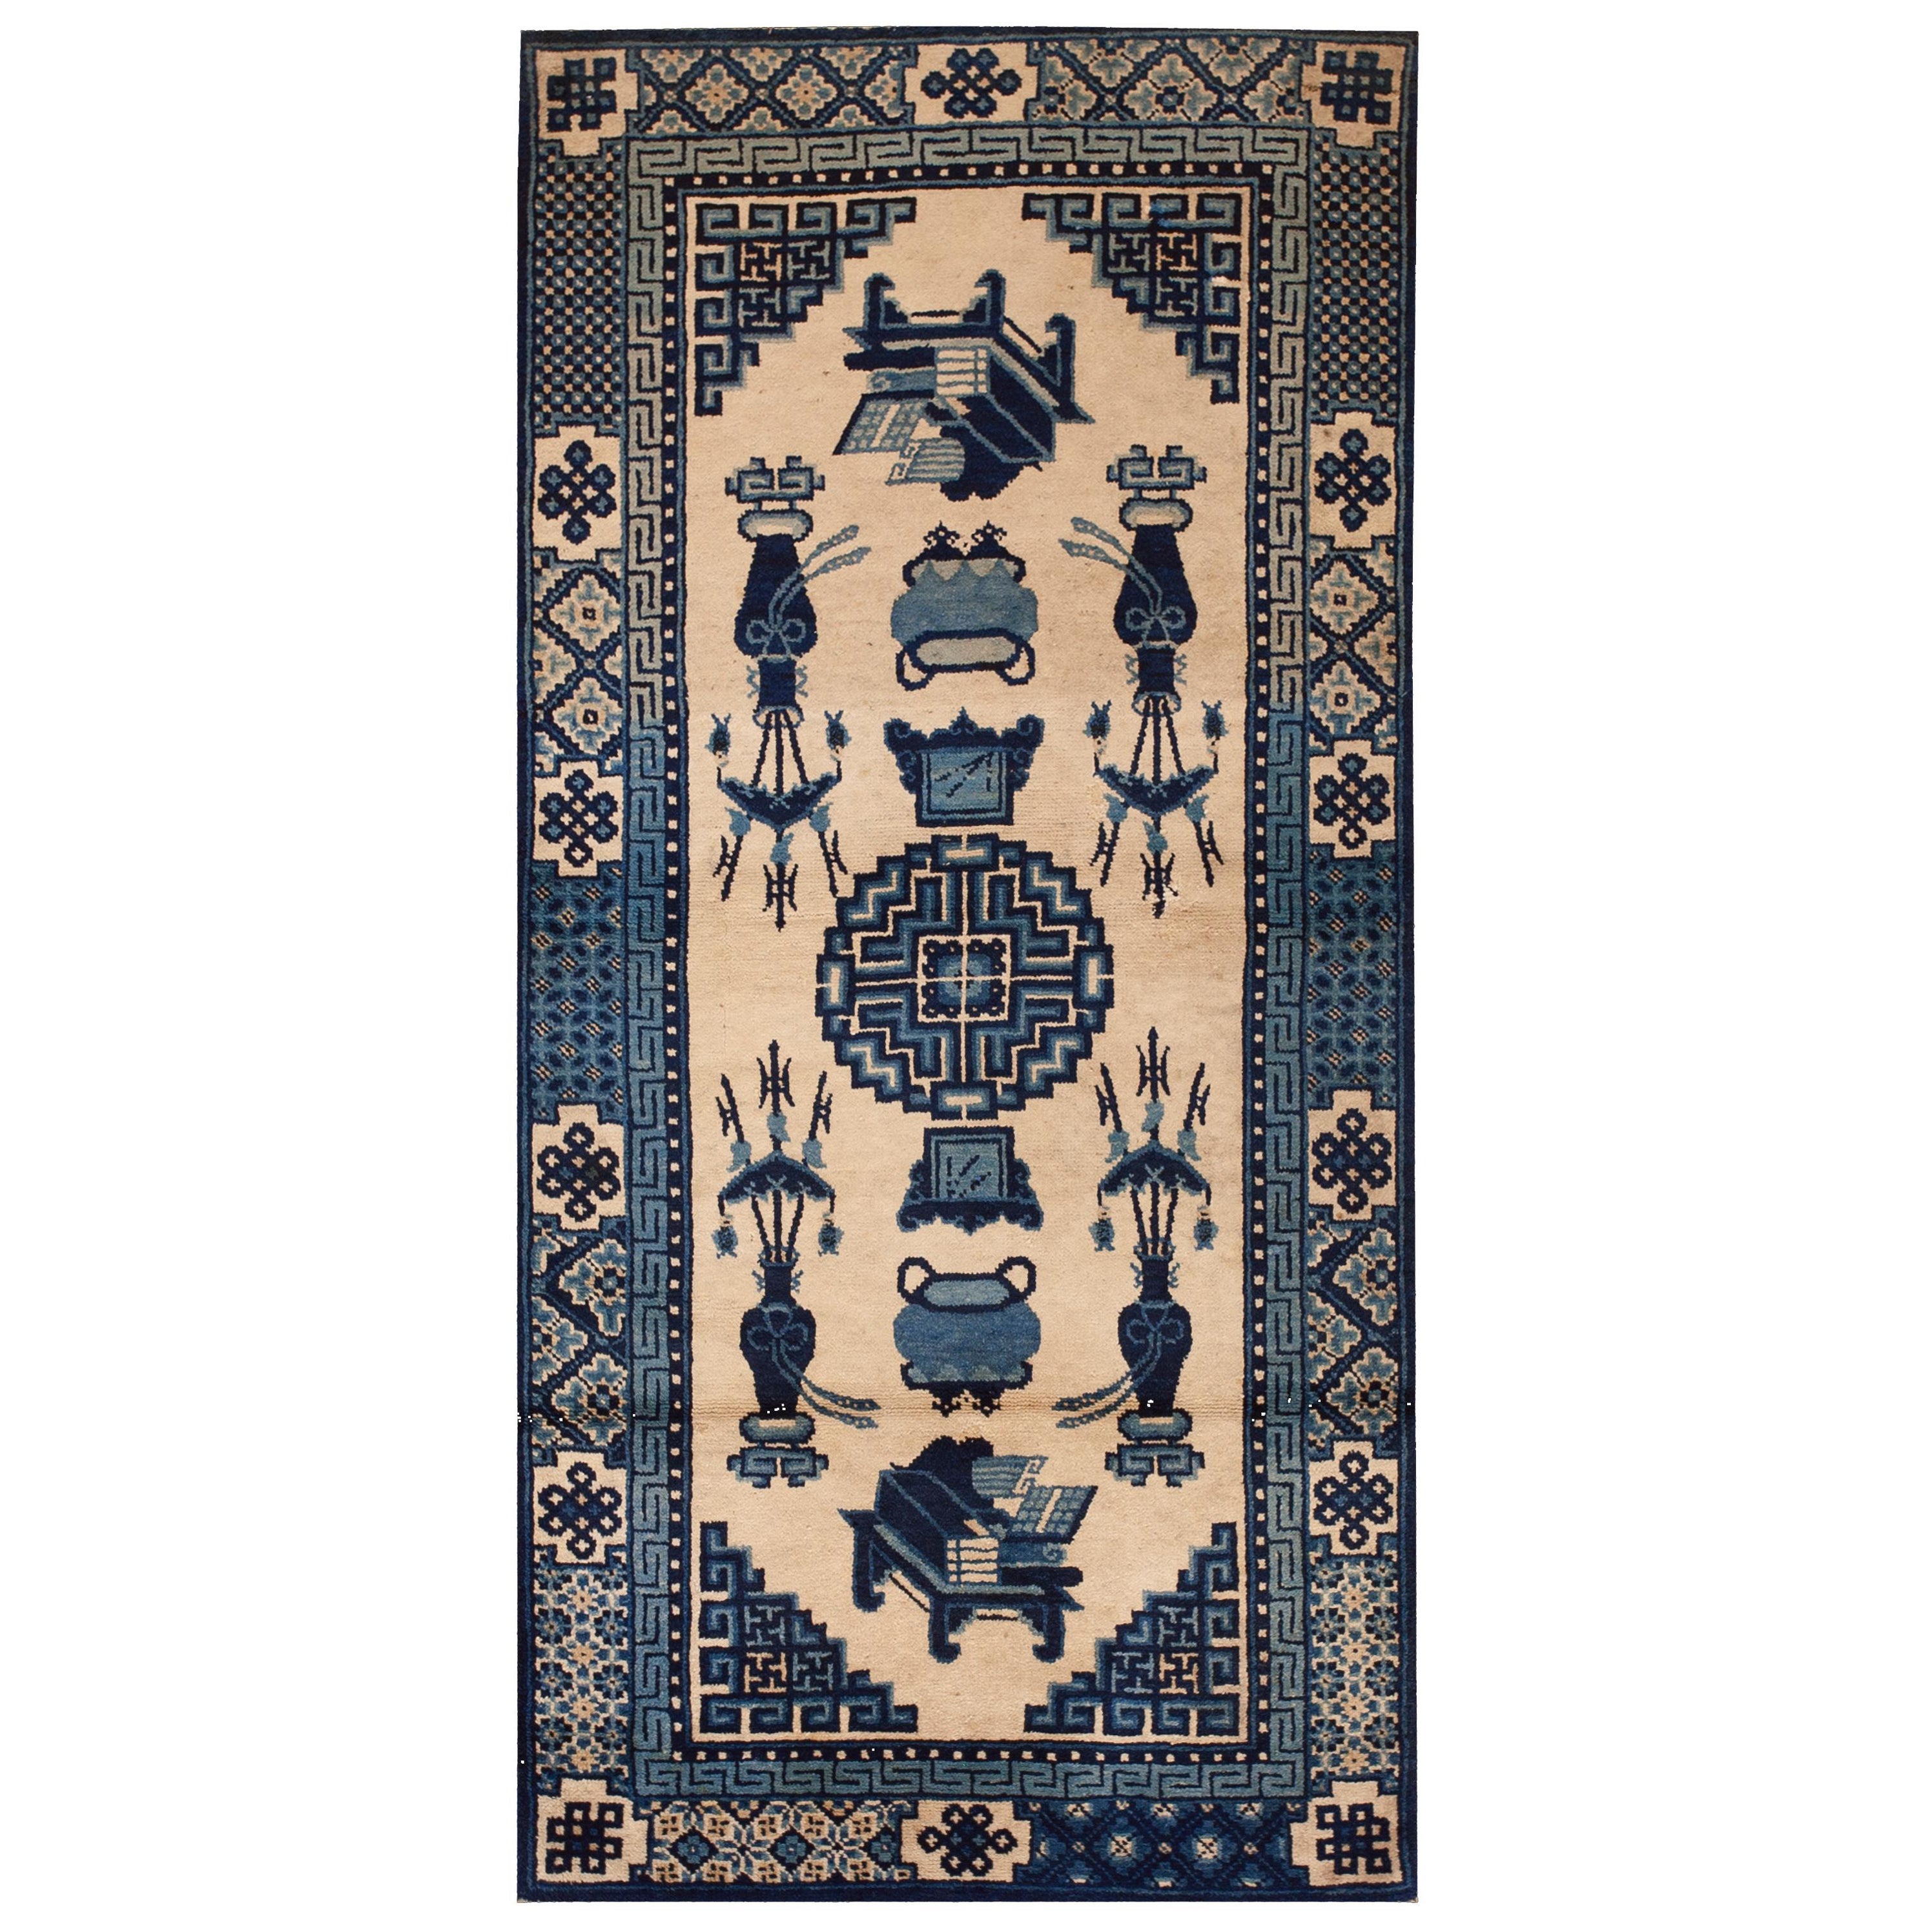 Early 20th Century N. Chinese Baotou Carpet ( 2'6" x 5'3" - 70 x 137 )